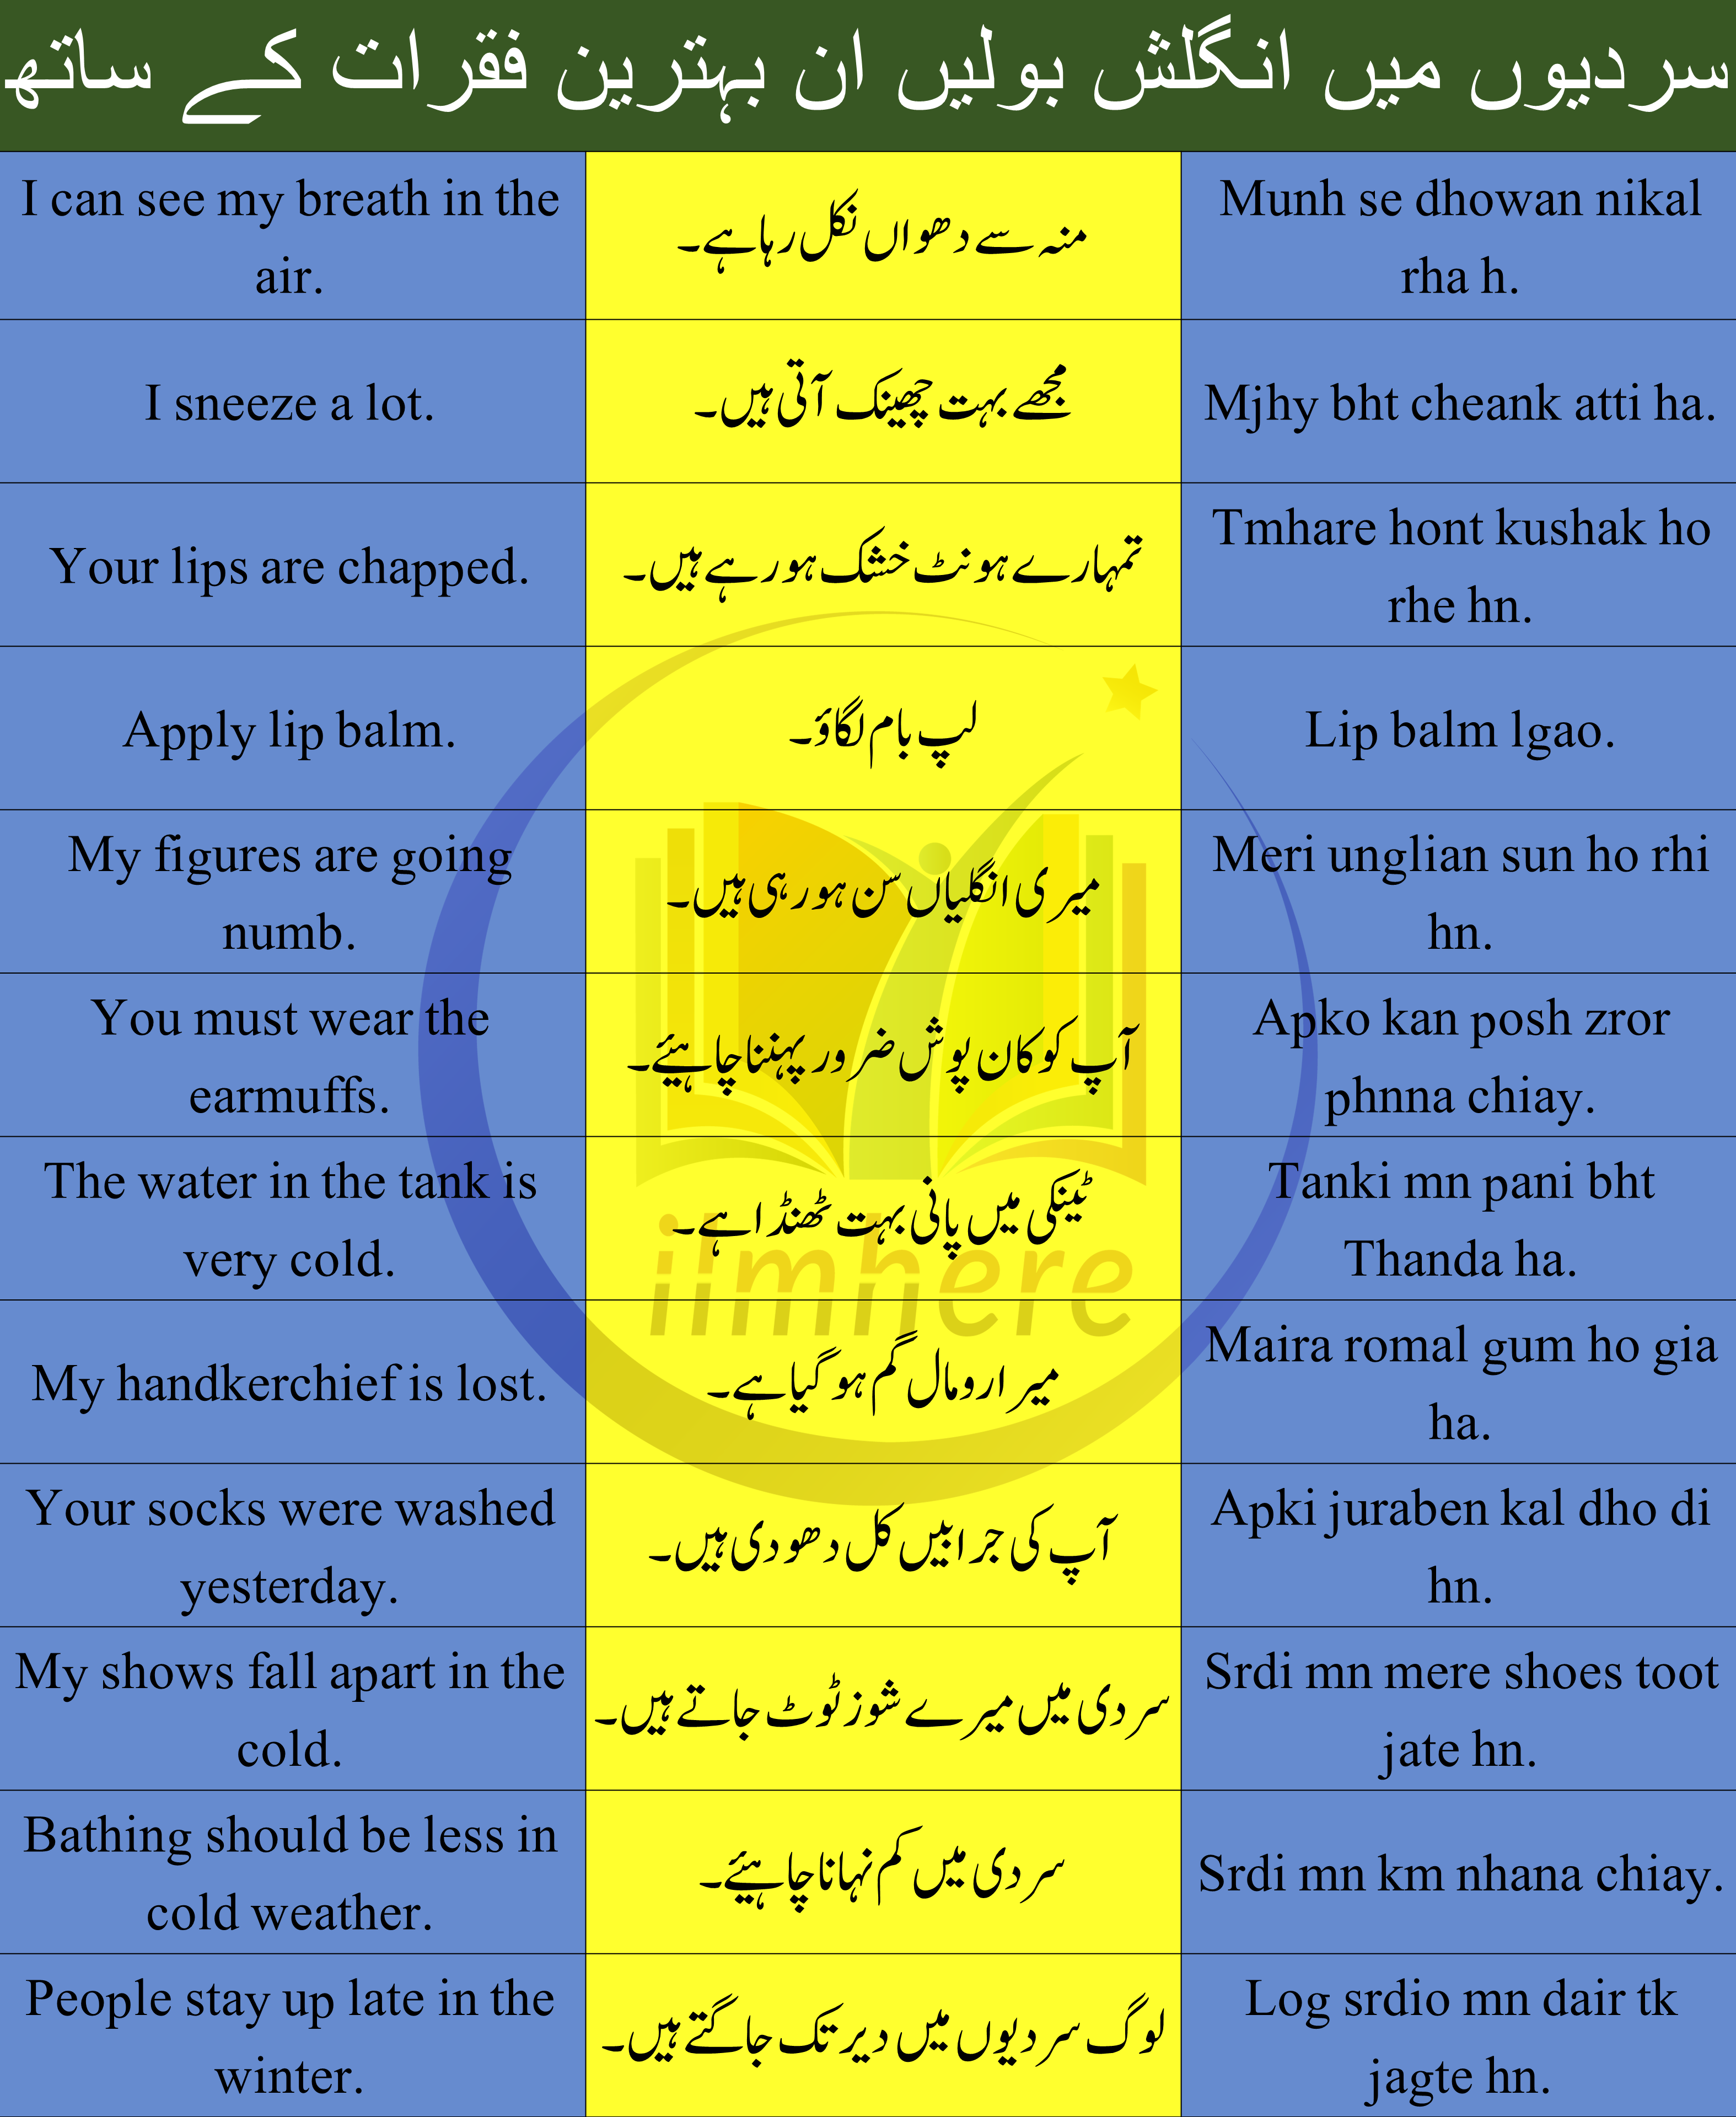 List 2 - English To Urdu Sentences For Winter Season